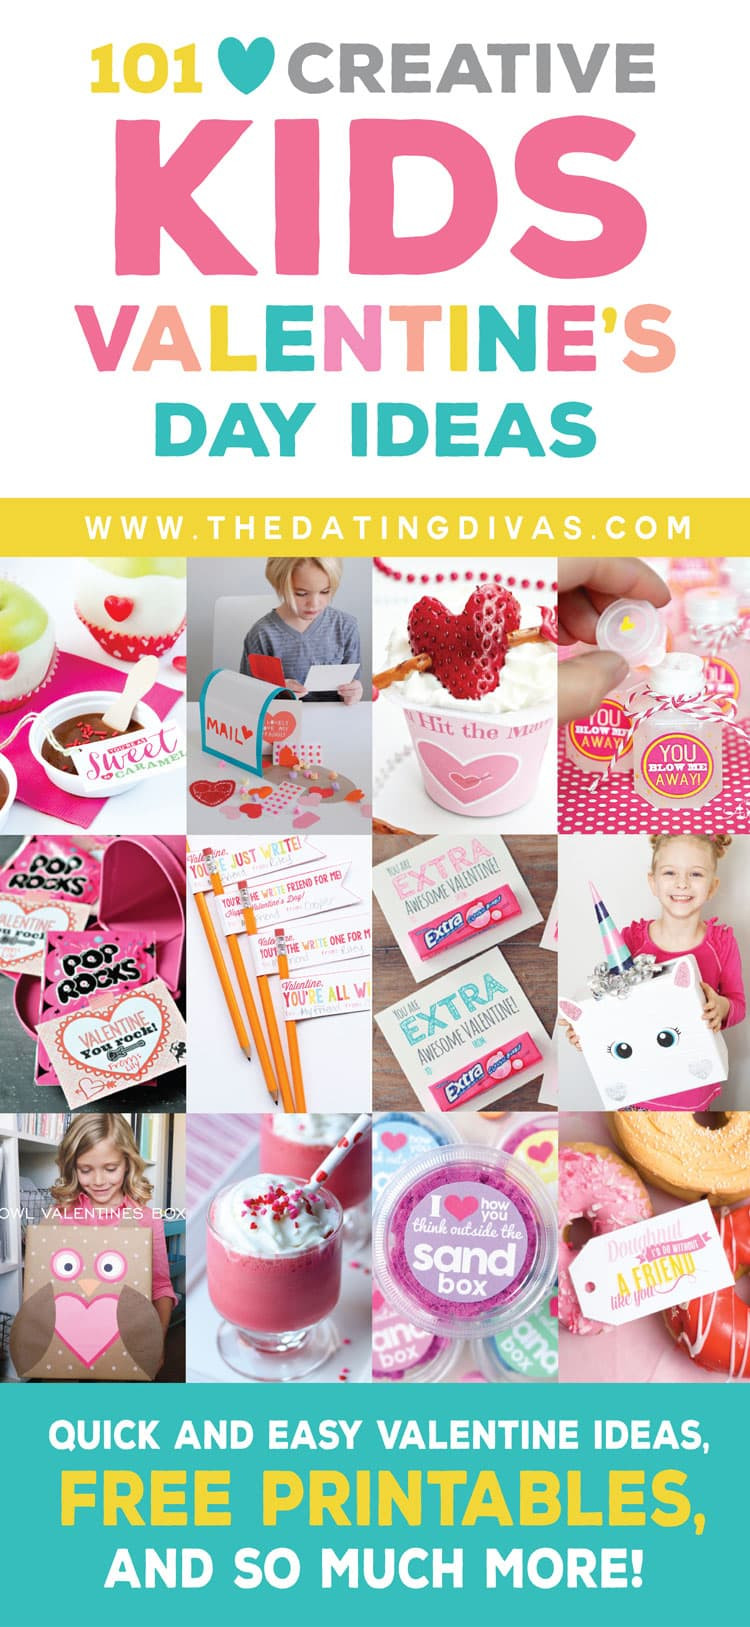 Creative Valentines Day Ideas
 Kids Valentine s Day Ideas From The Dating Divas